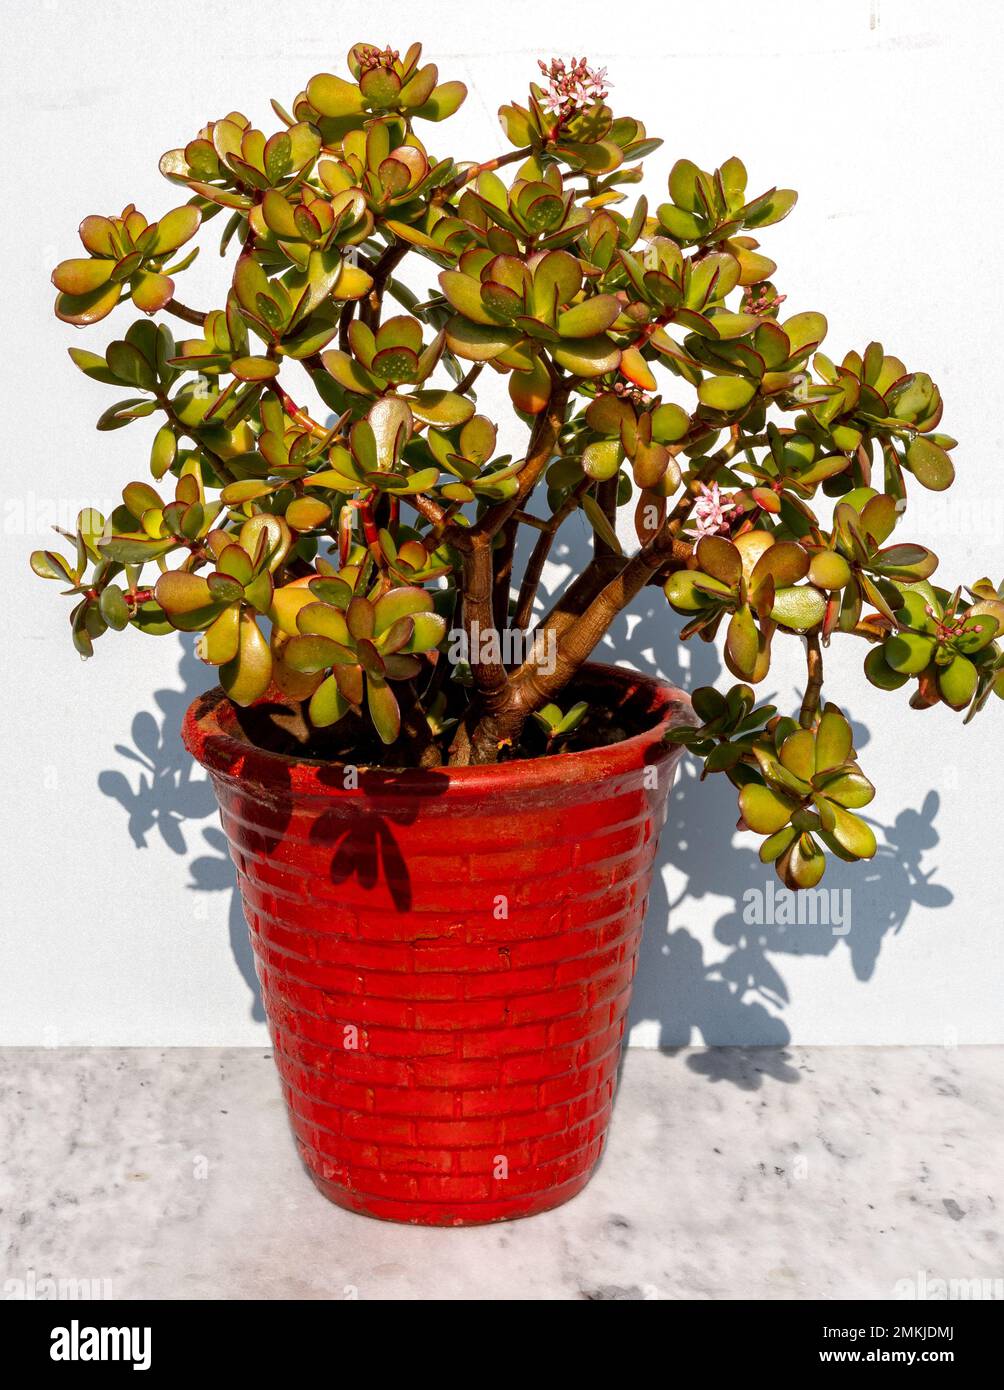 Crassula ovata jade plant money tree in red pot Stock Photo